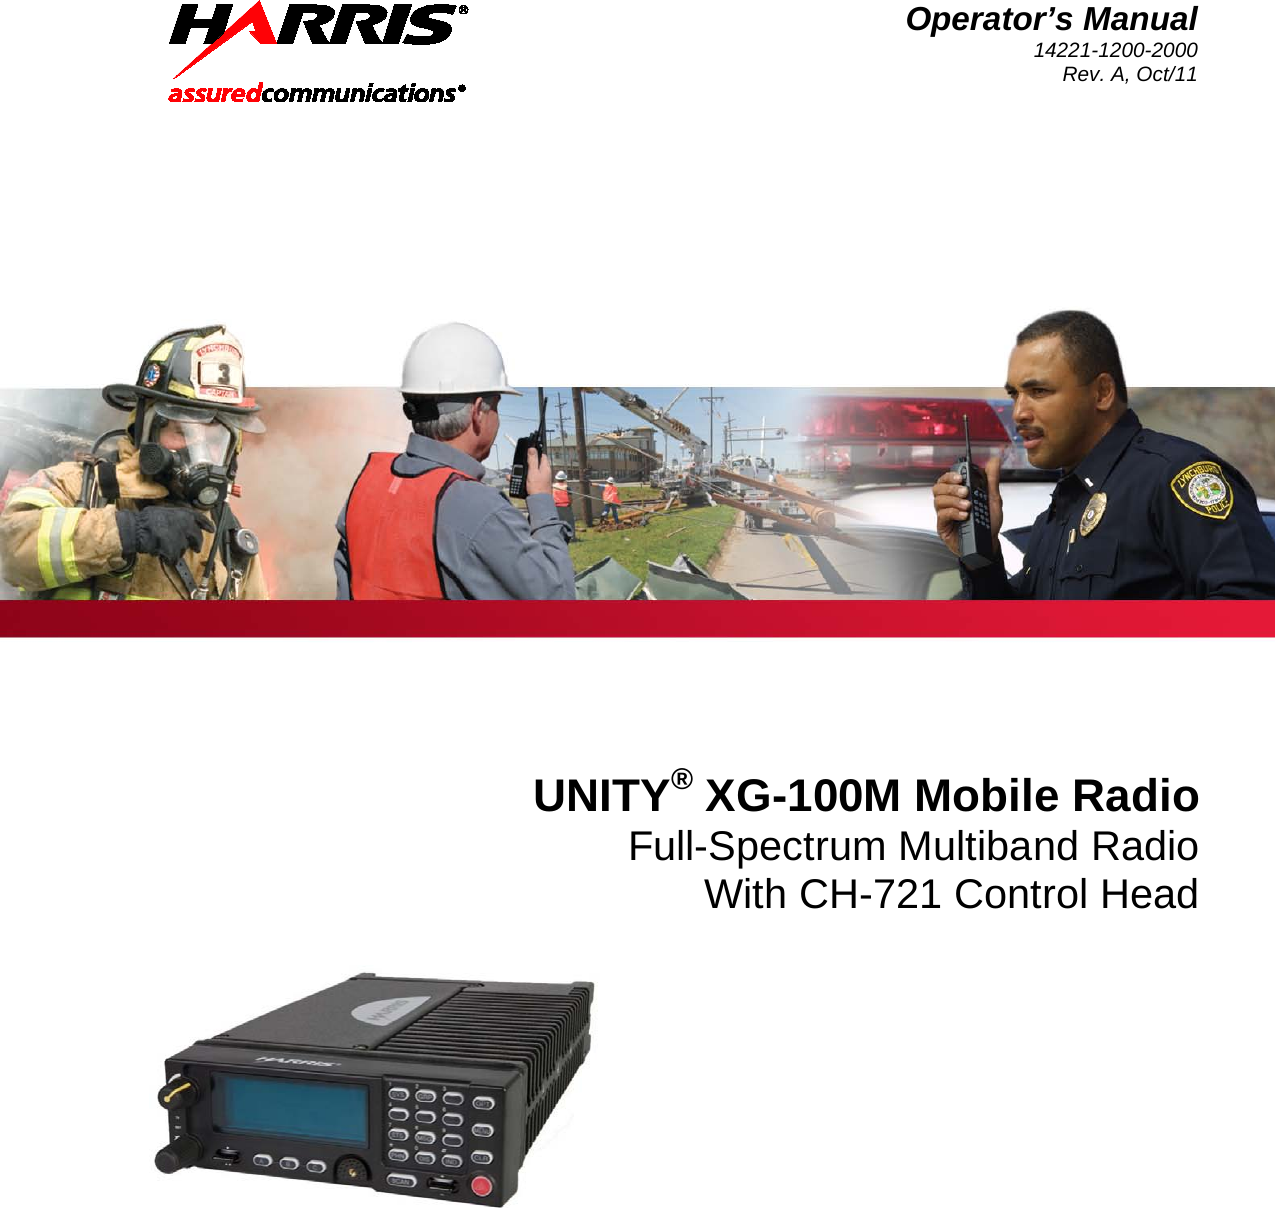  Operator’s Manual 14221-1200-2000 Rev. A, Oct/11     UNITY® XG-100M Mobile Radio Full-Spectrum Multiband Radio With CH-721 Control Head   